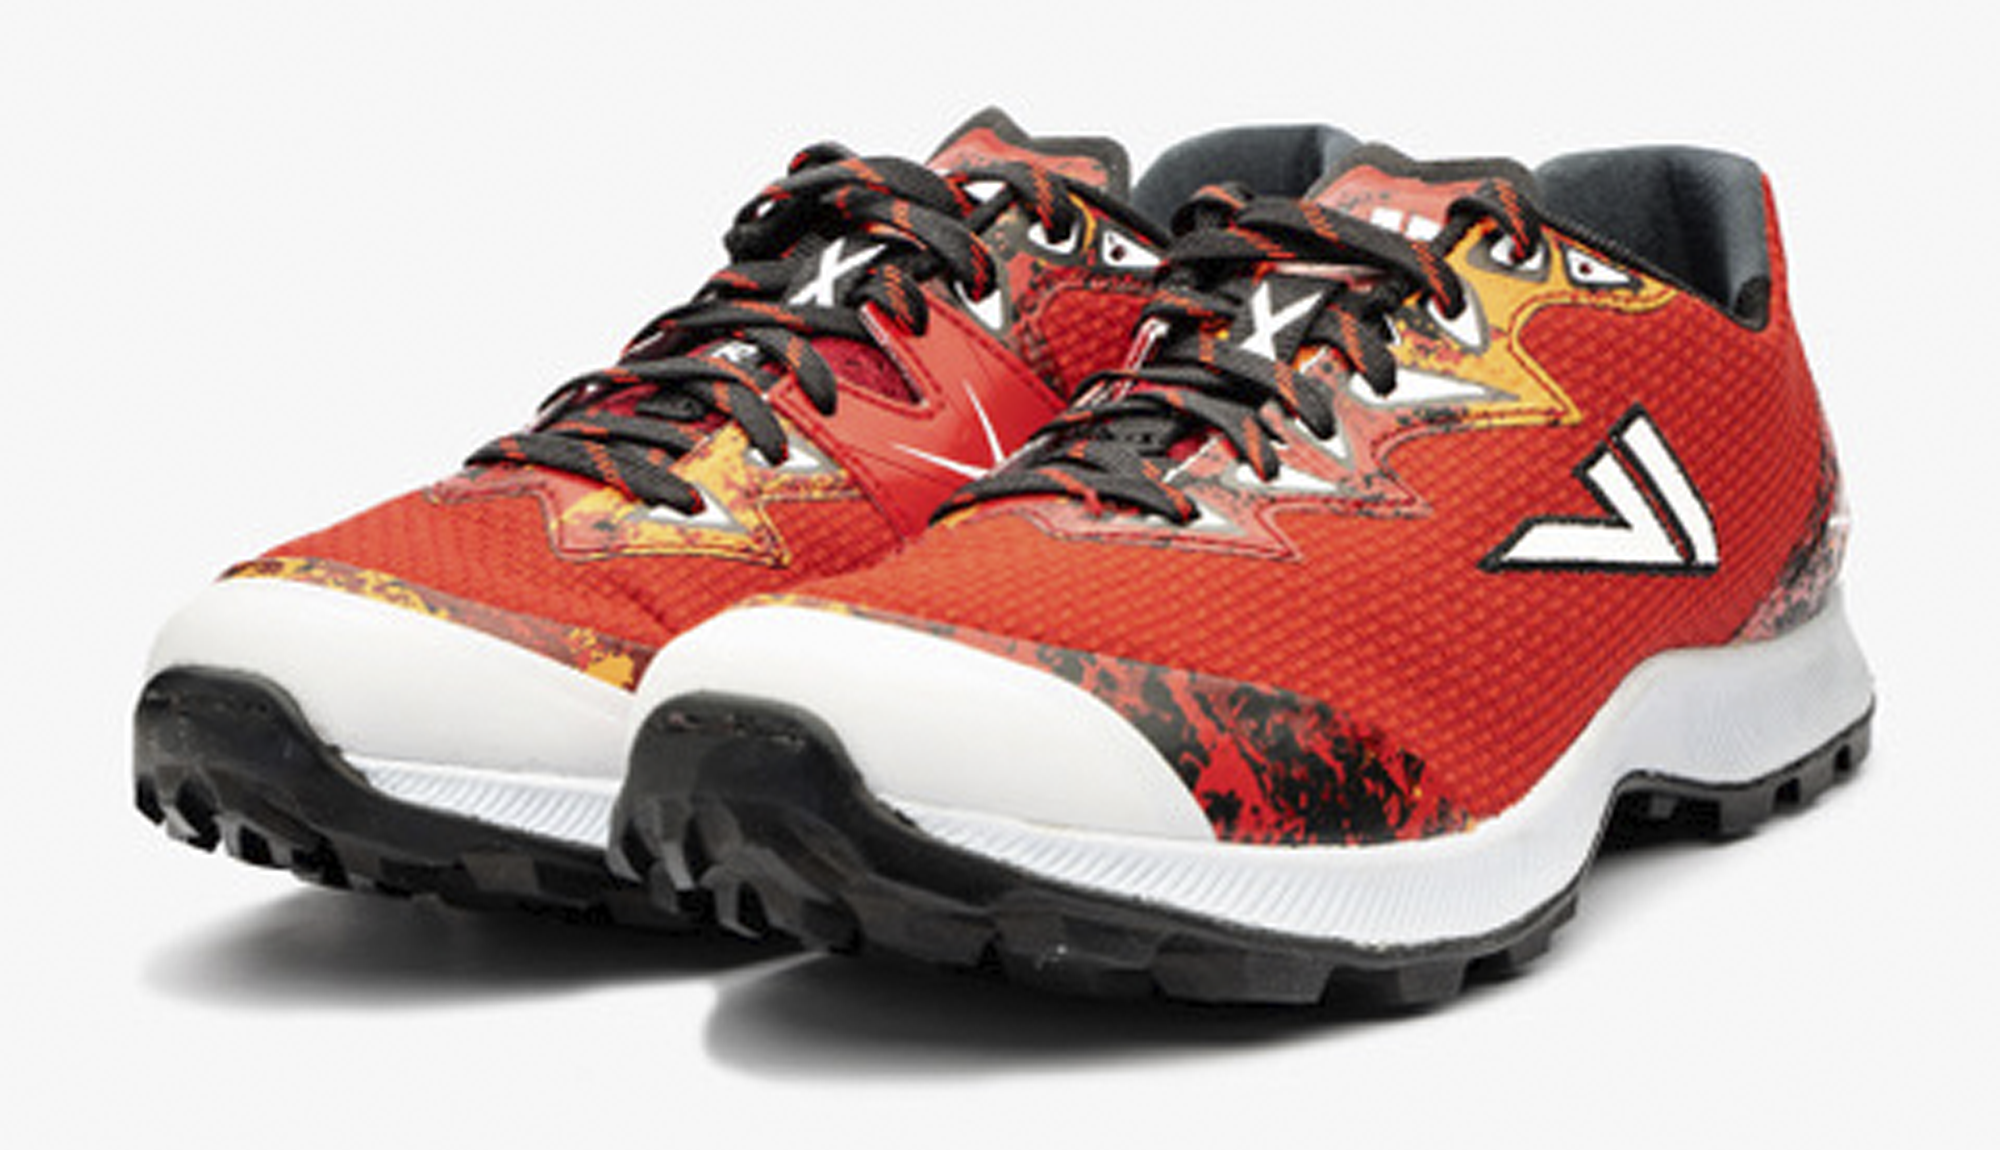 Betasten ziel Zeg opzij VJ Shoes XTRM 2 Trail Running Shoes with Aggressive Grip